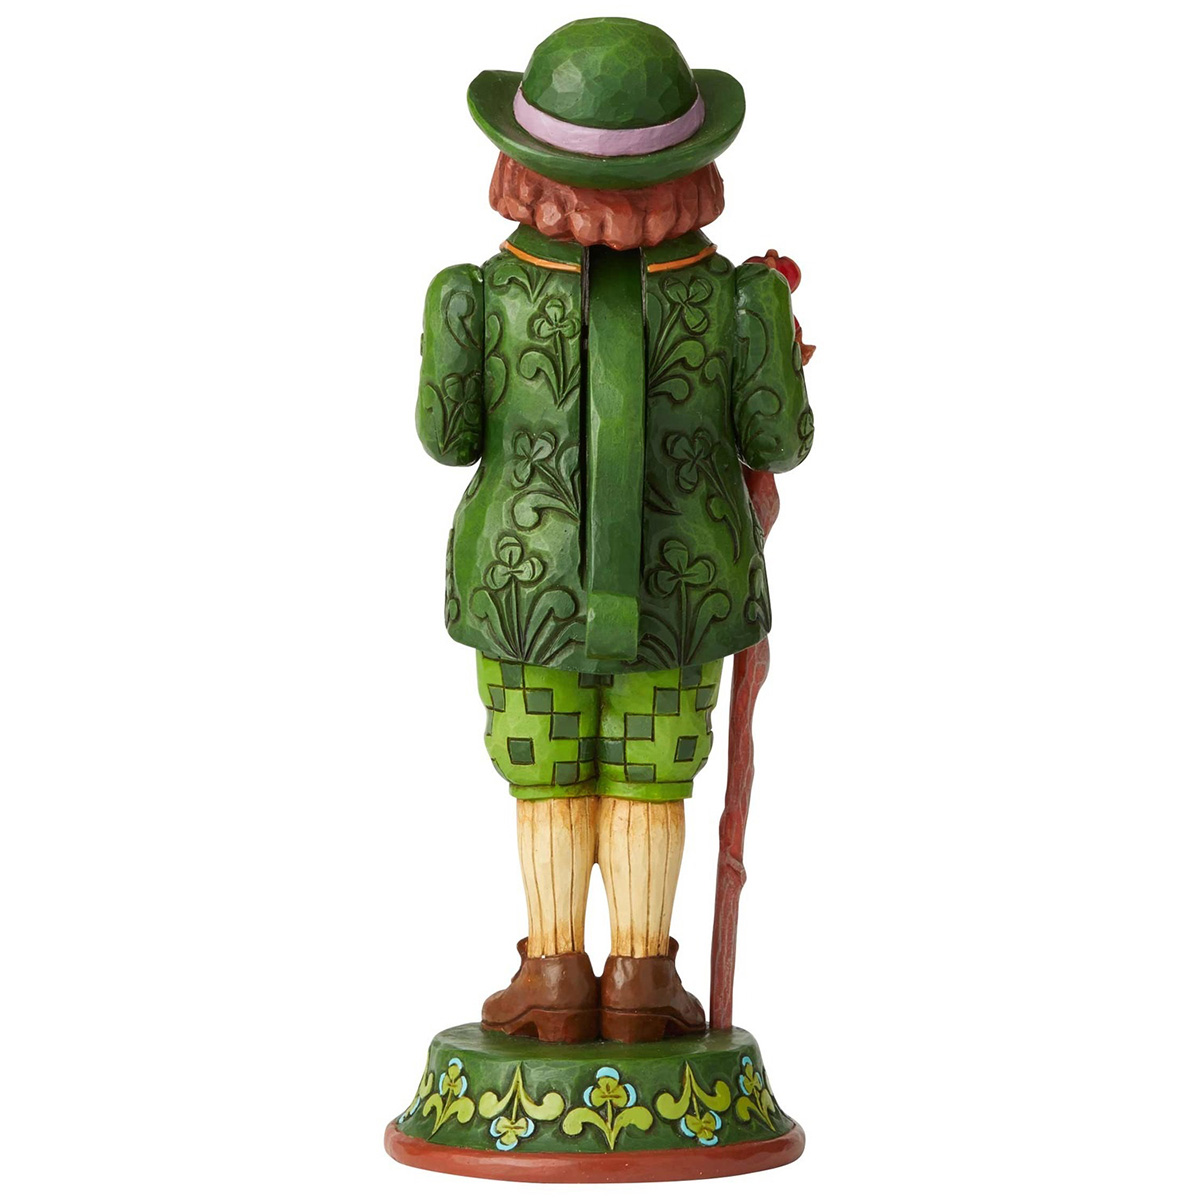 Product image for Irish Christmas | Quite Charming Irish Nutcracker Figurine